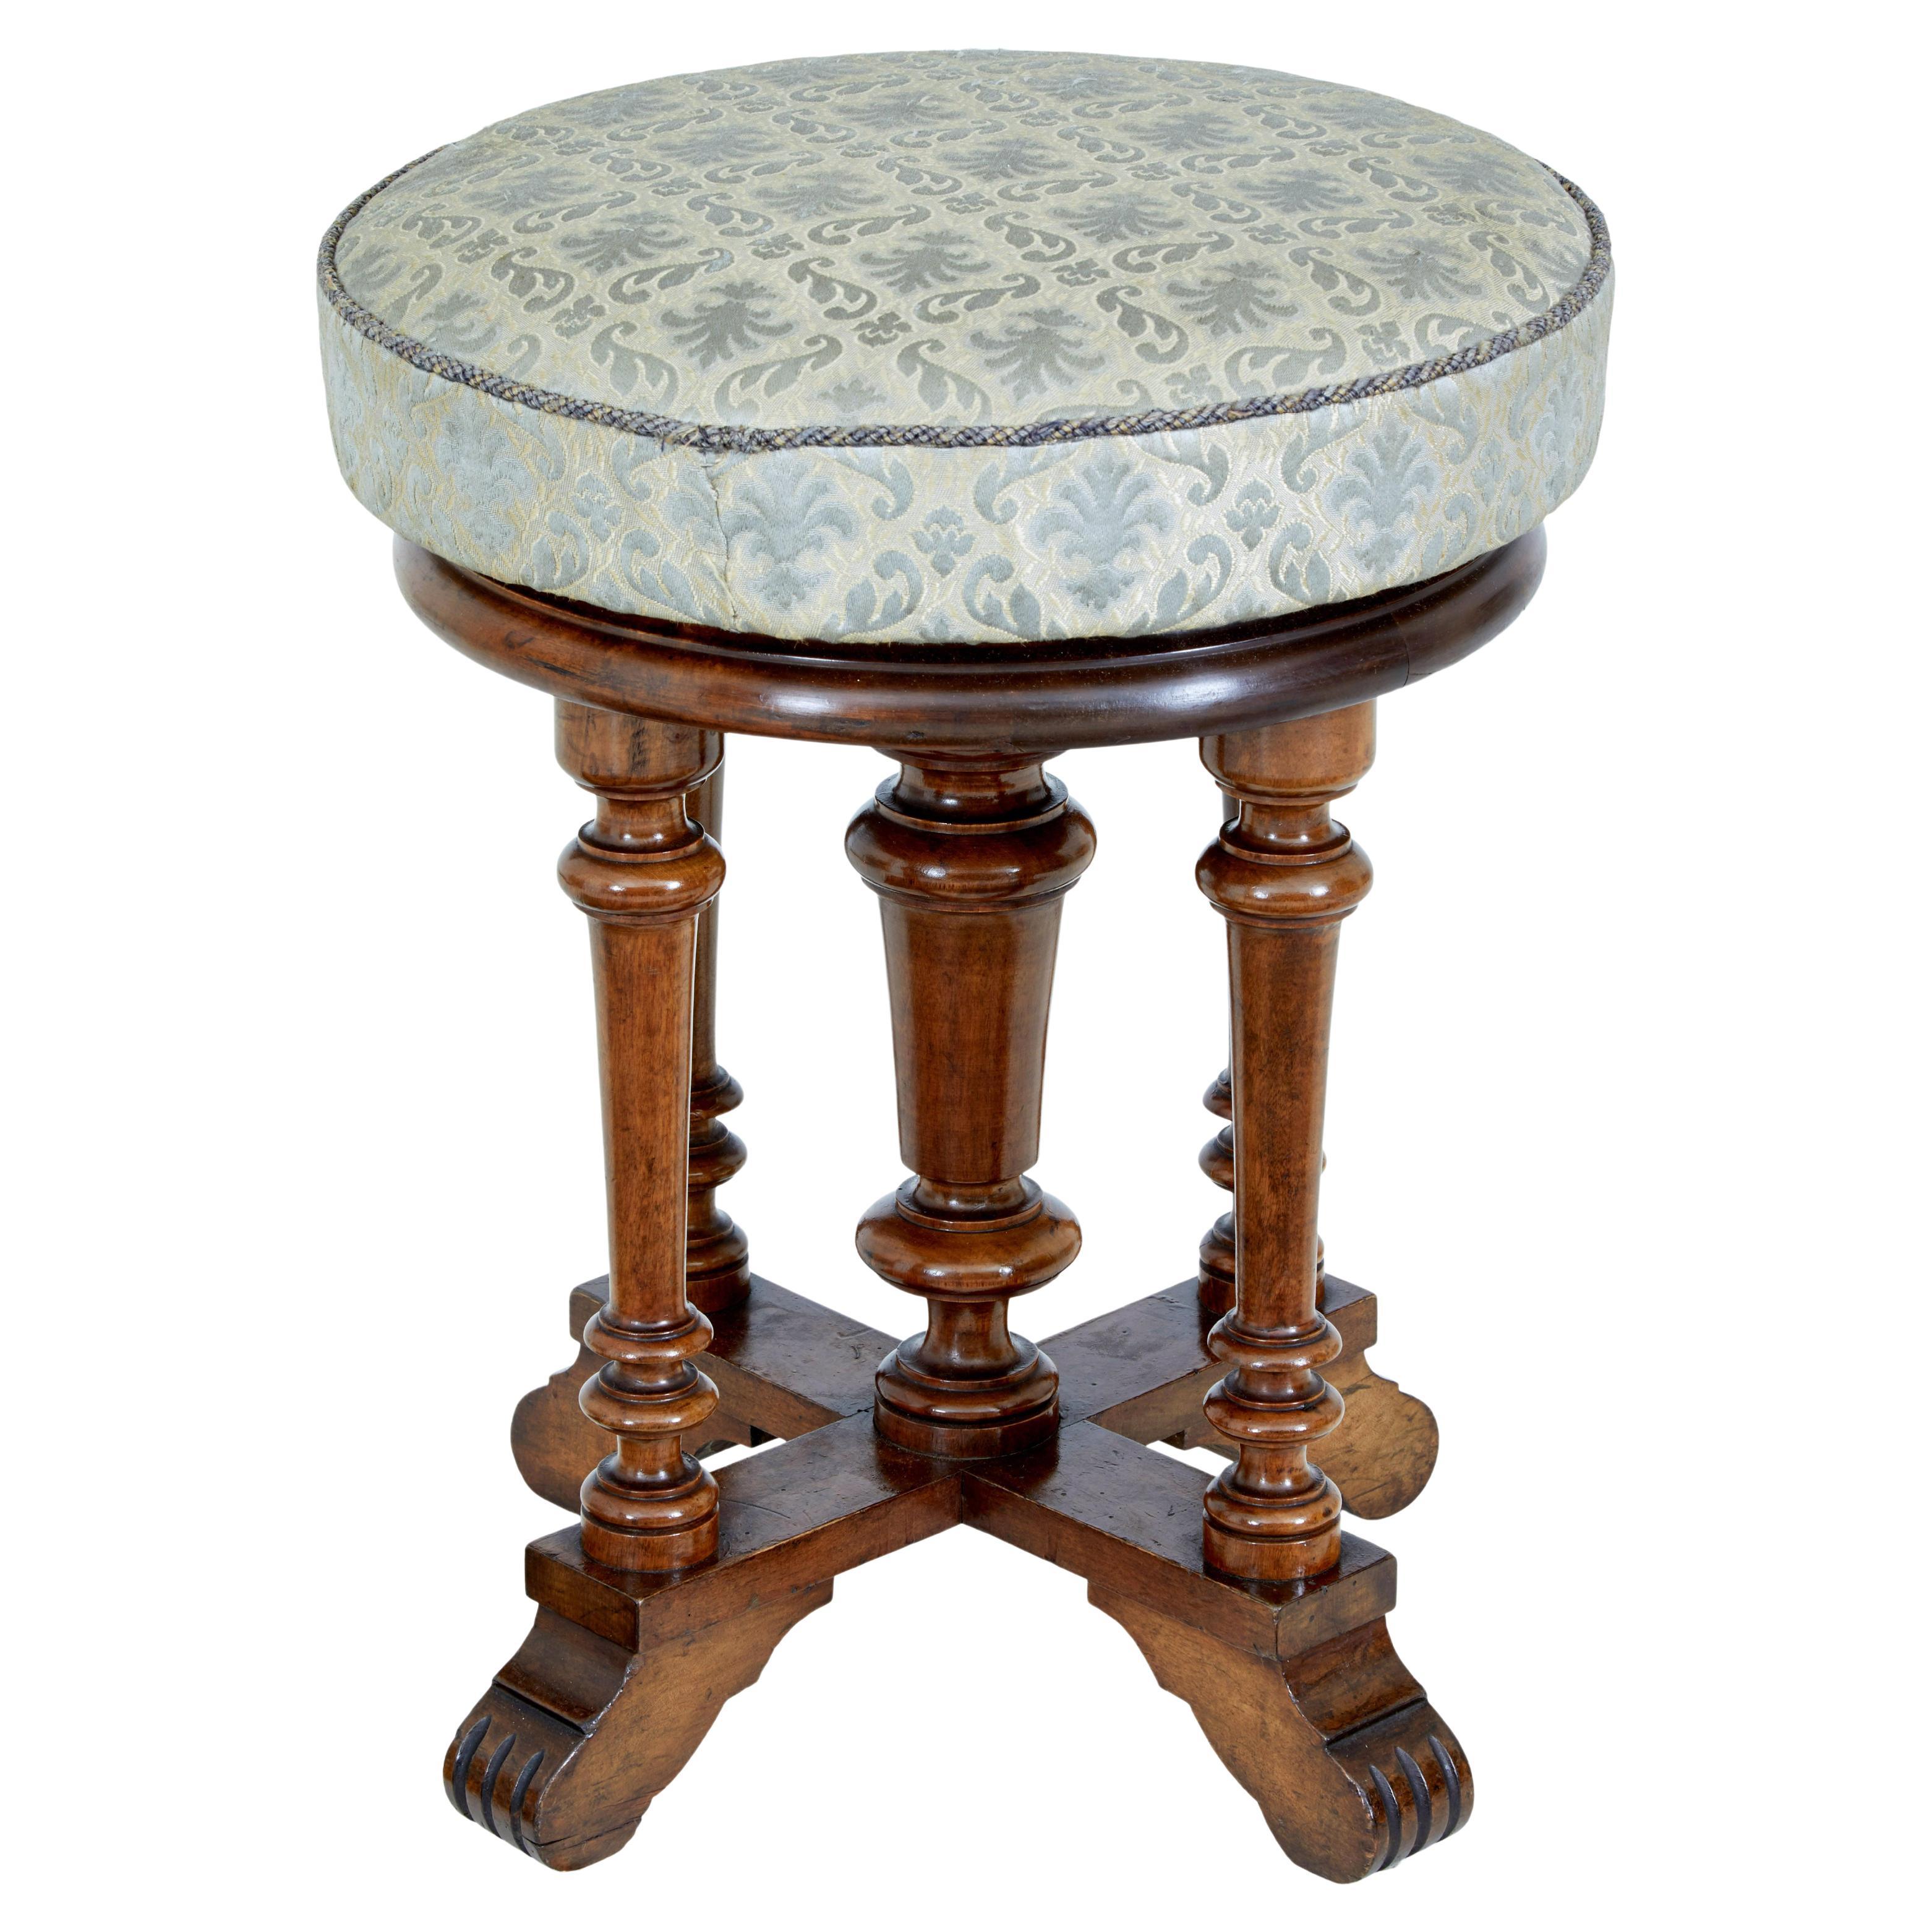 Late 19th century adjustable walnut piano stool